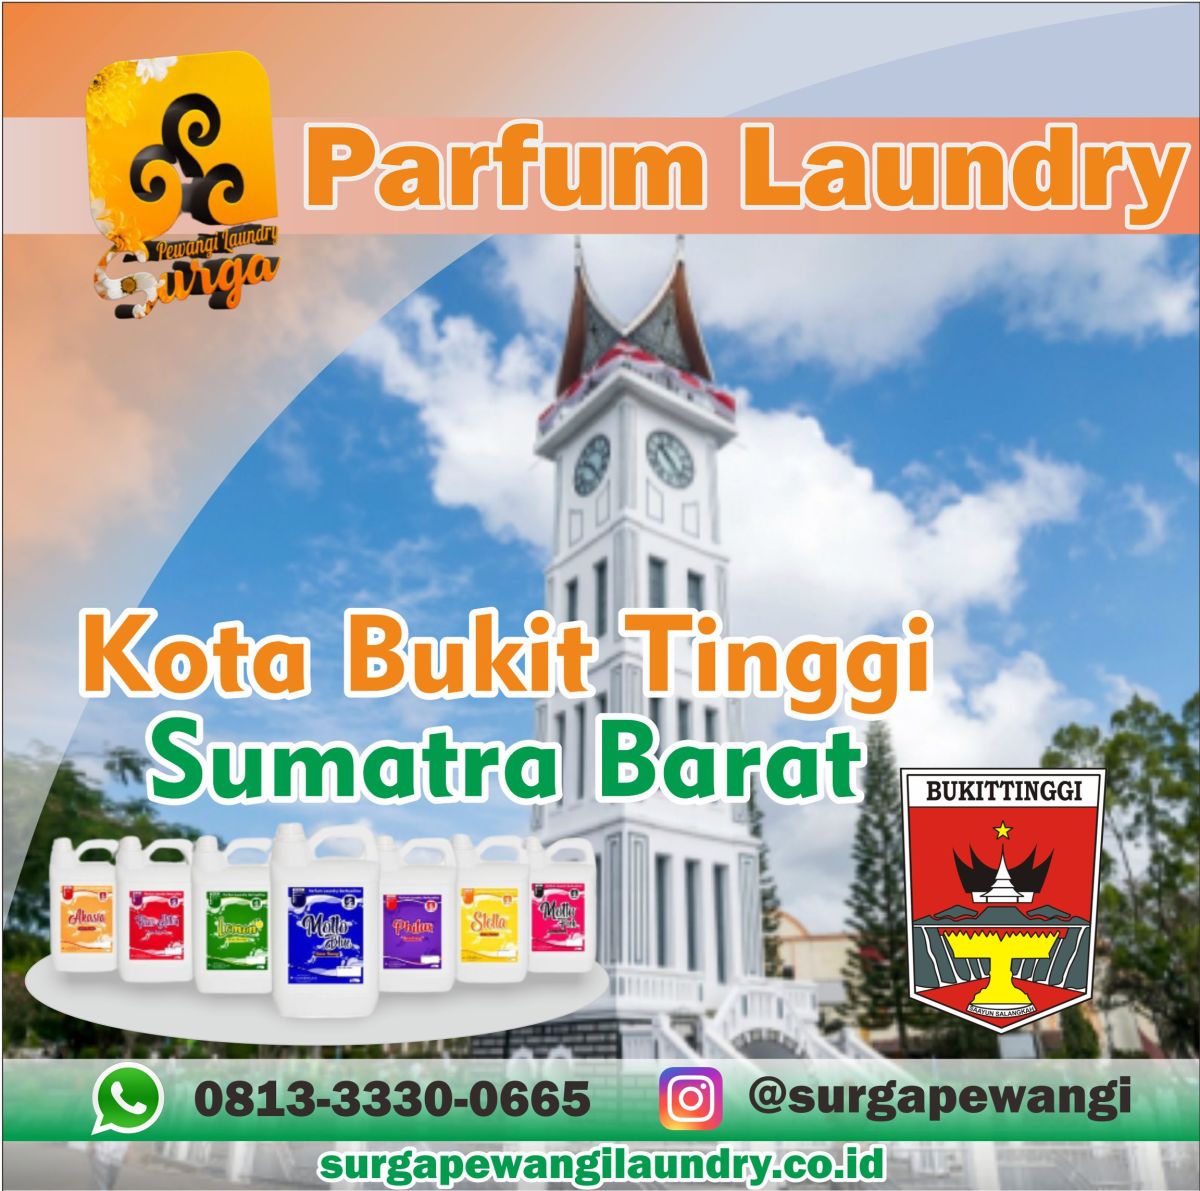 Parfum Laundry Kota Bukit Tinggi, Sumatra Barat